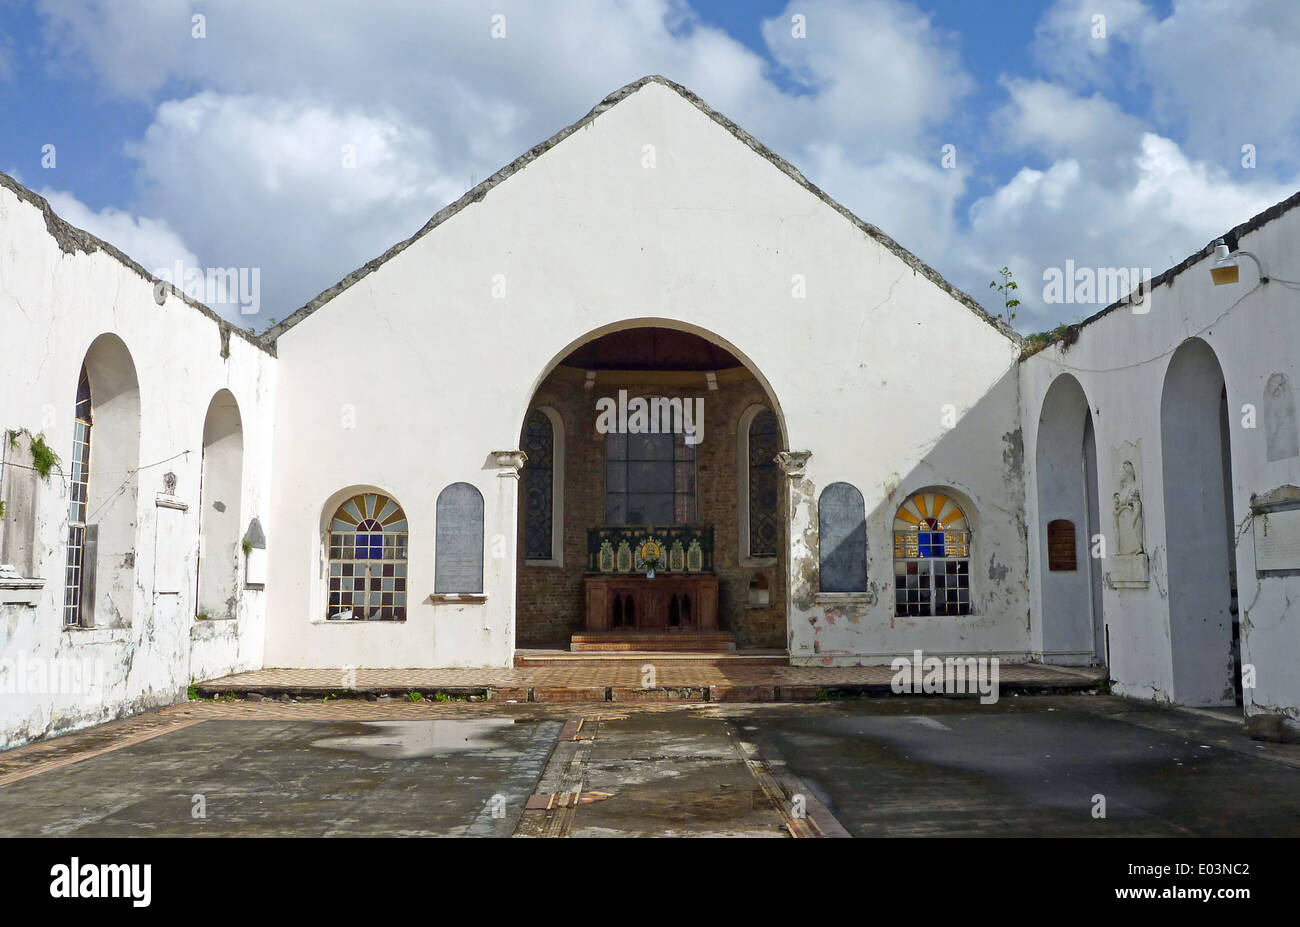 La ruina de la Iglesia Anglicana de Saint Georges. La iglesia fue destruida durante el huracán Iván. Granada, Caribe. Foto de stock